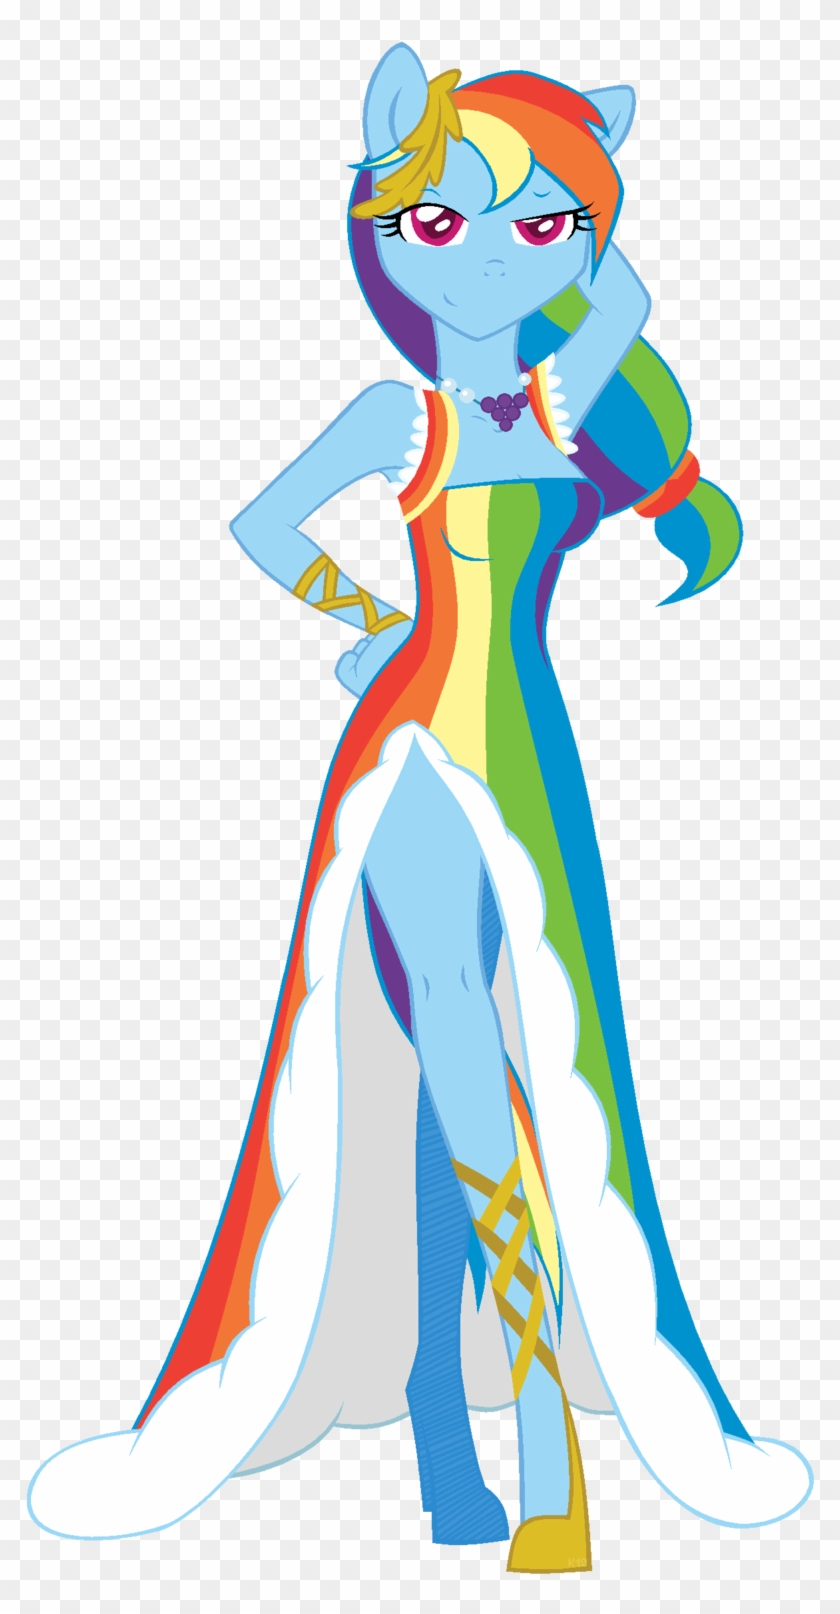 Rainbow Dash Coloring Page - Princess Rainbow Dash Coloring Pages #652029